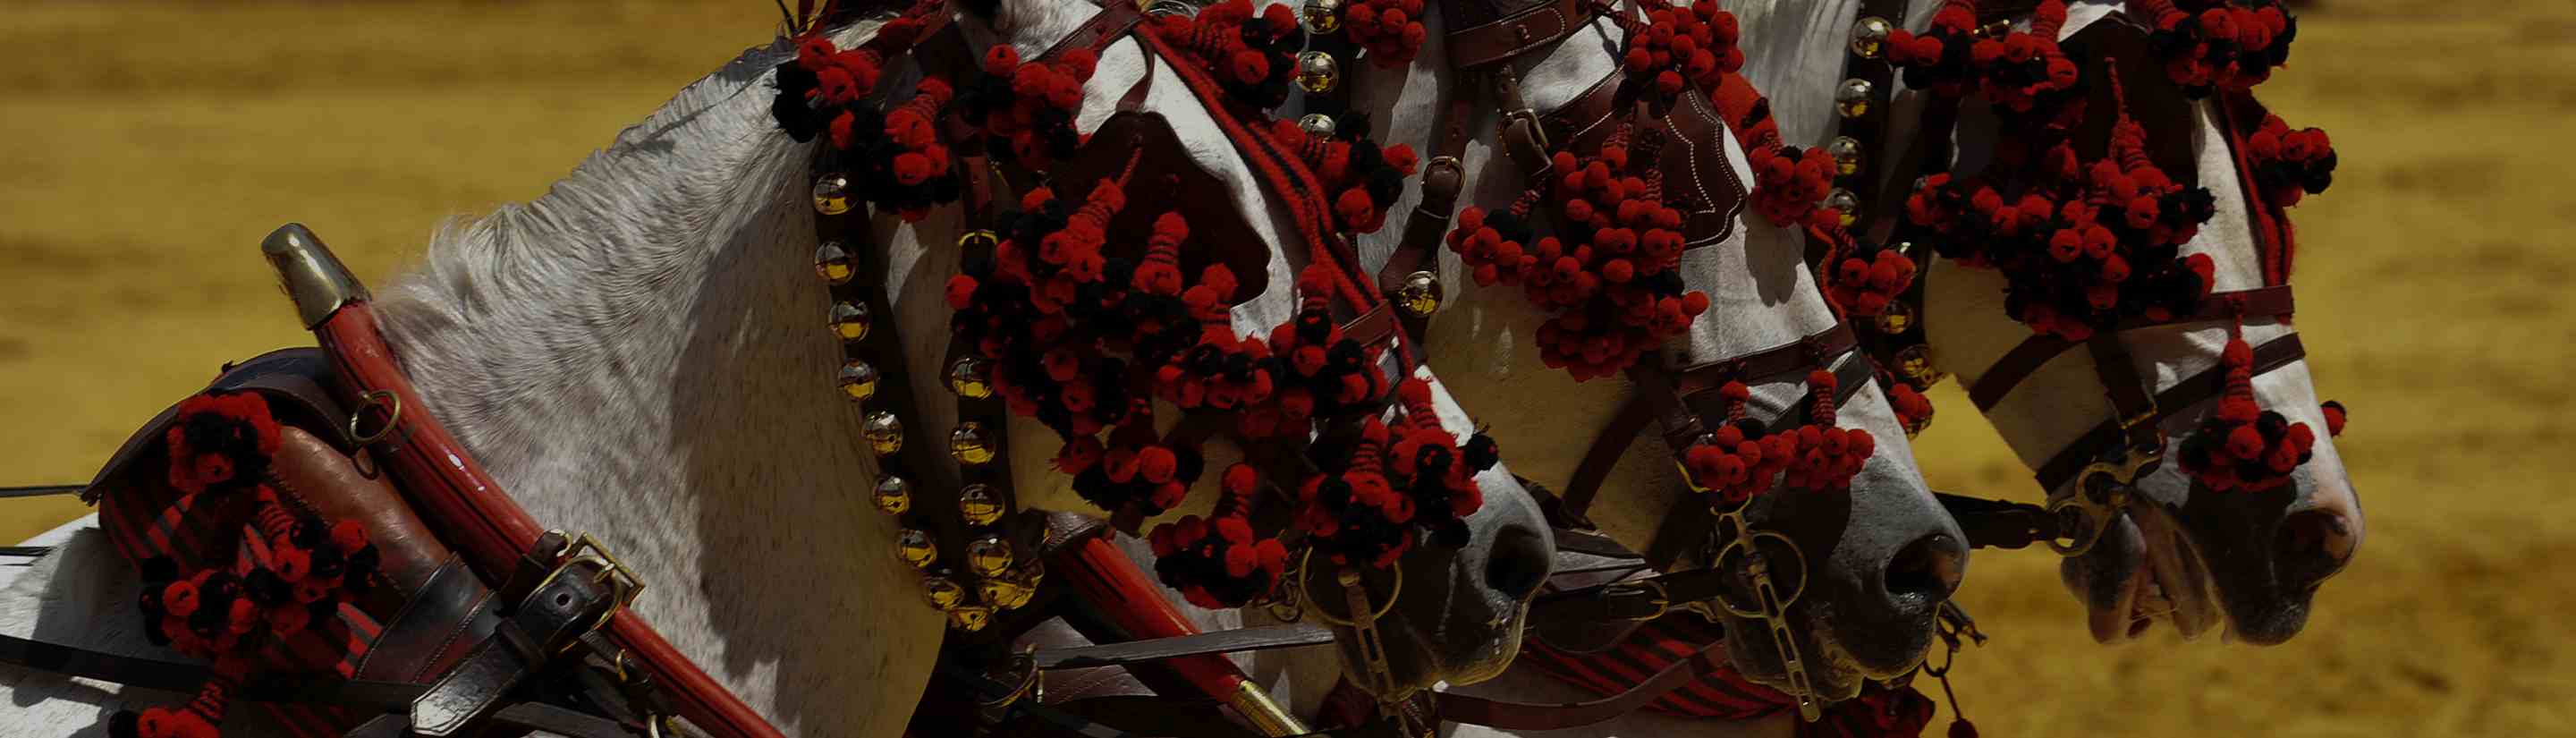 Pferde mit rotem Kopfschmuck in Andalusien Spanien